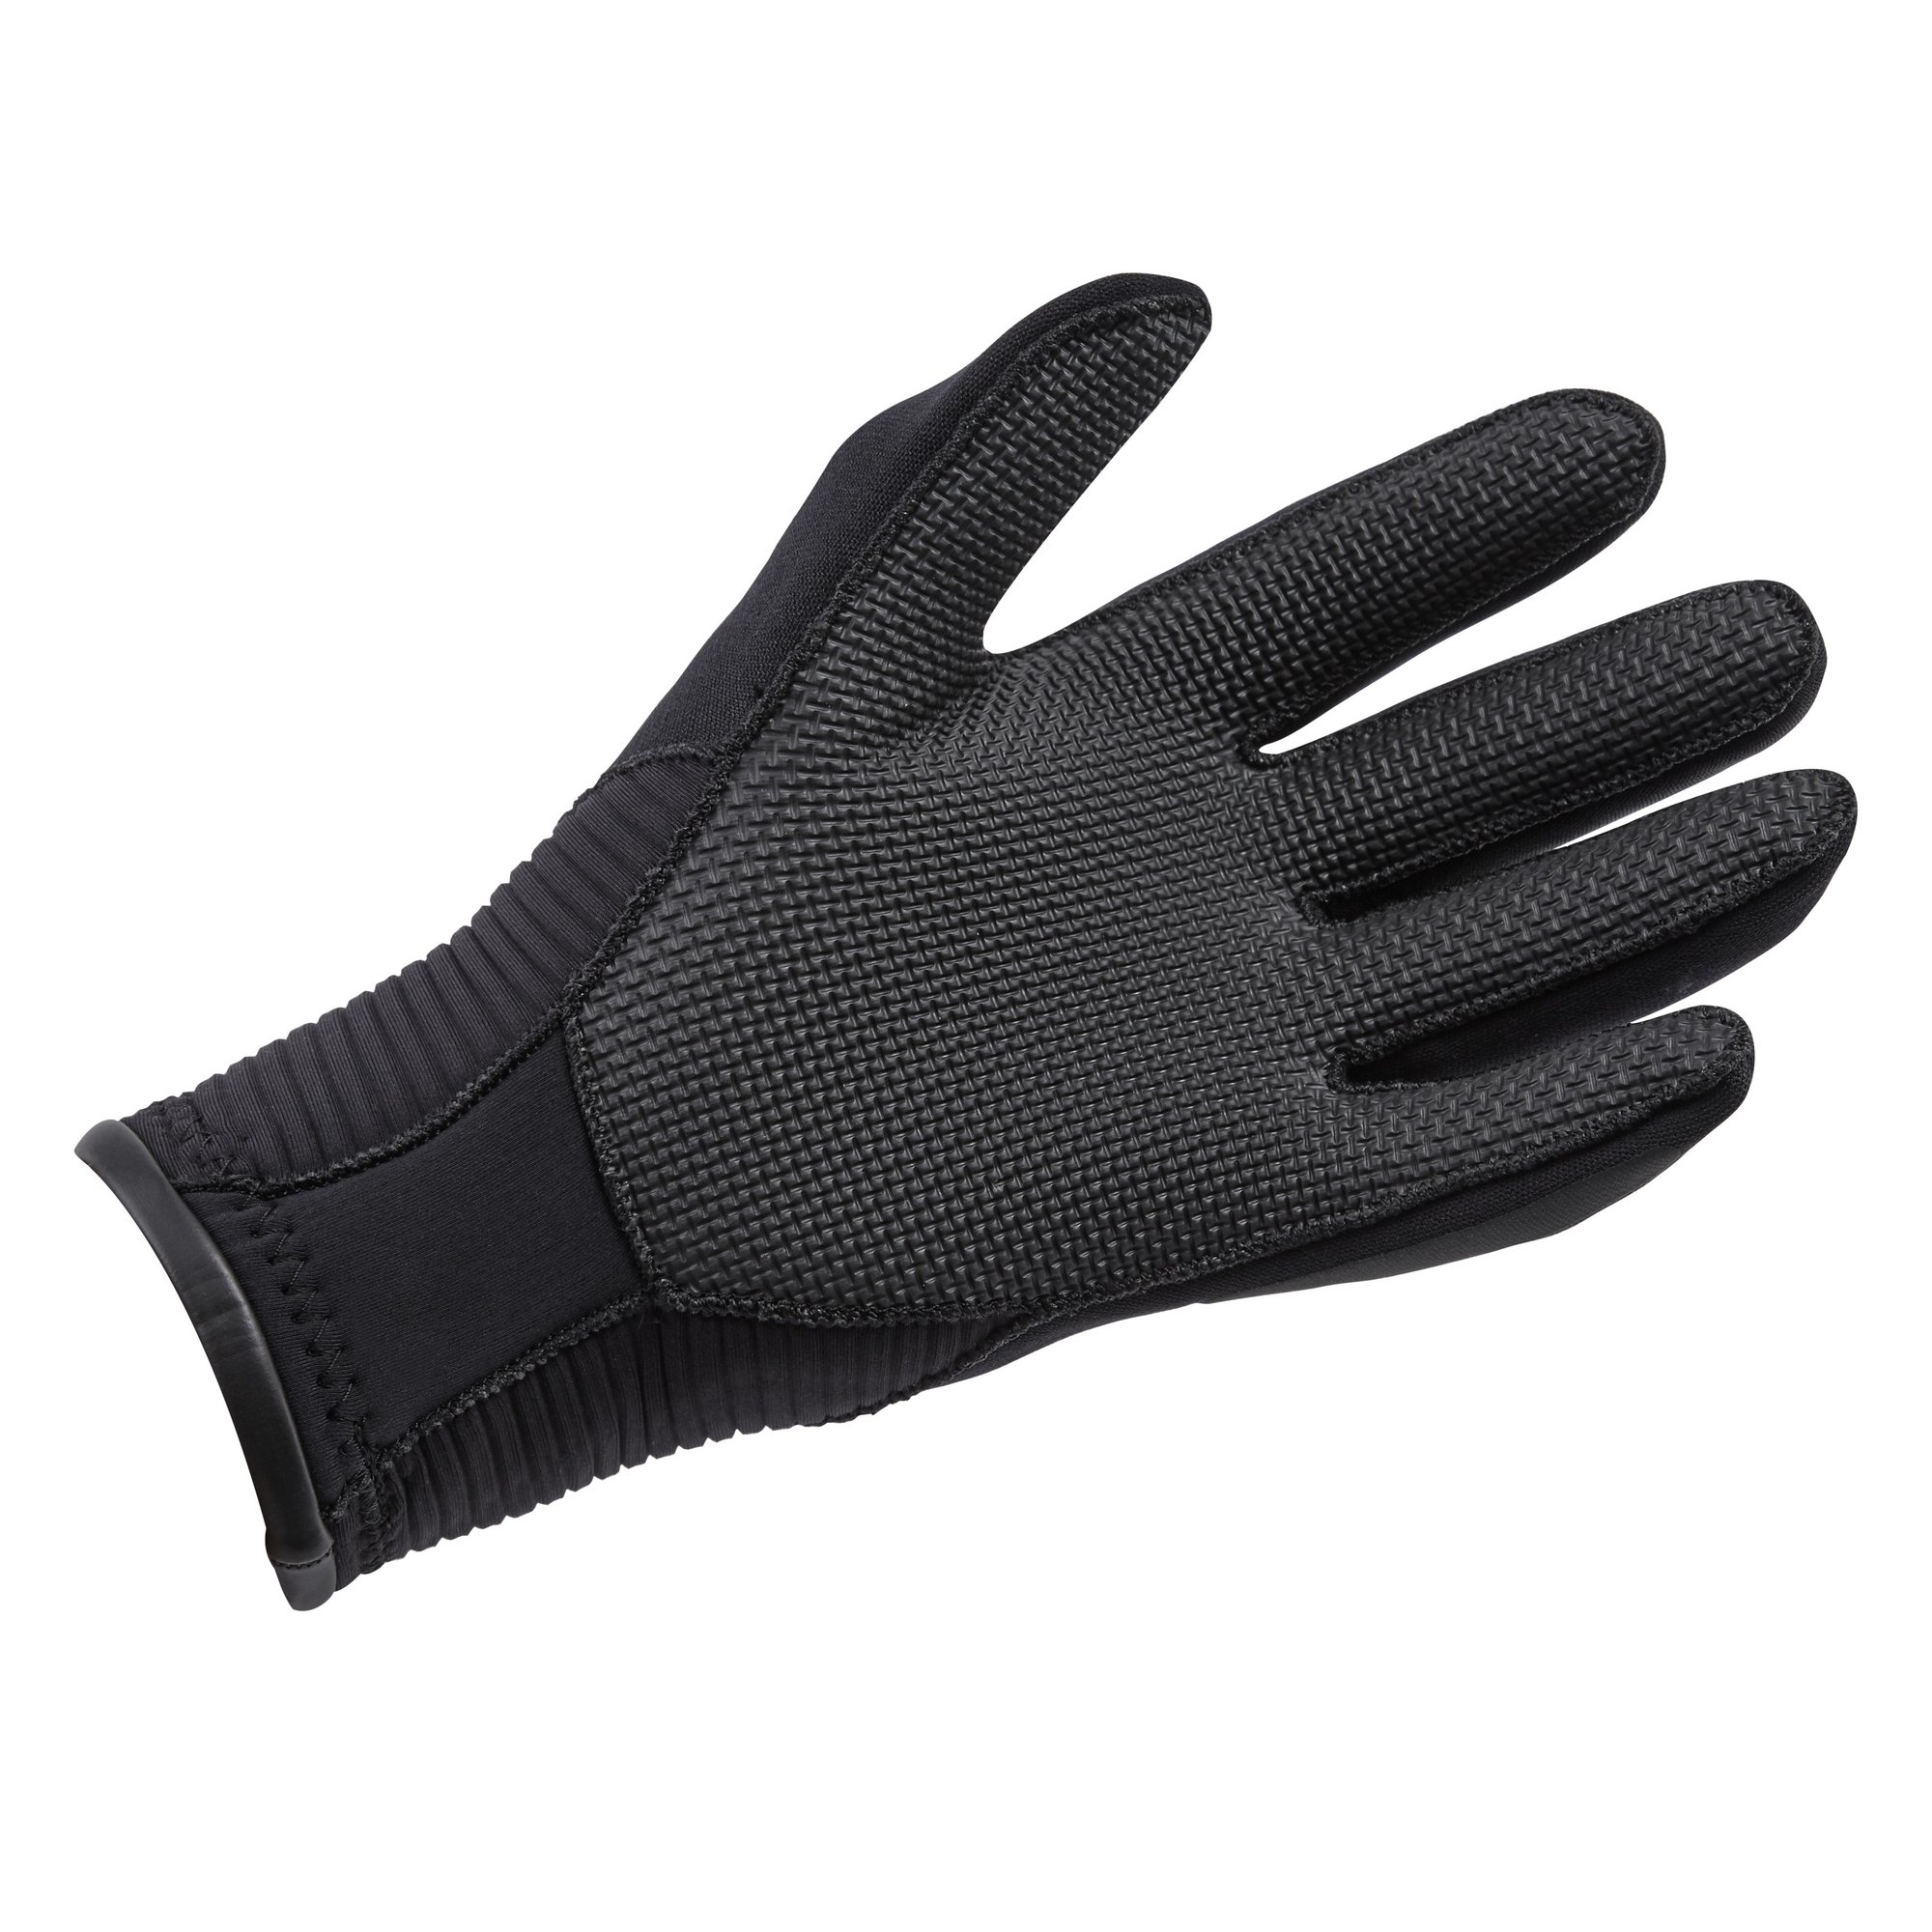 Gill Neoprene Winter Gloves, Sailing Accessories